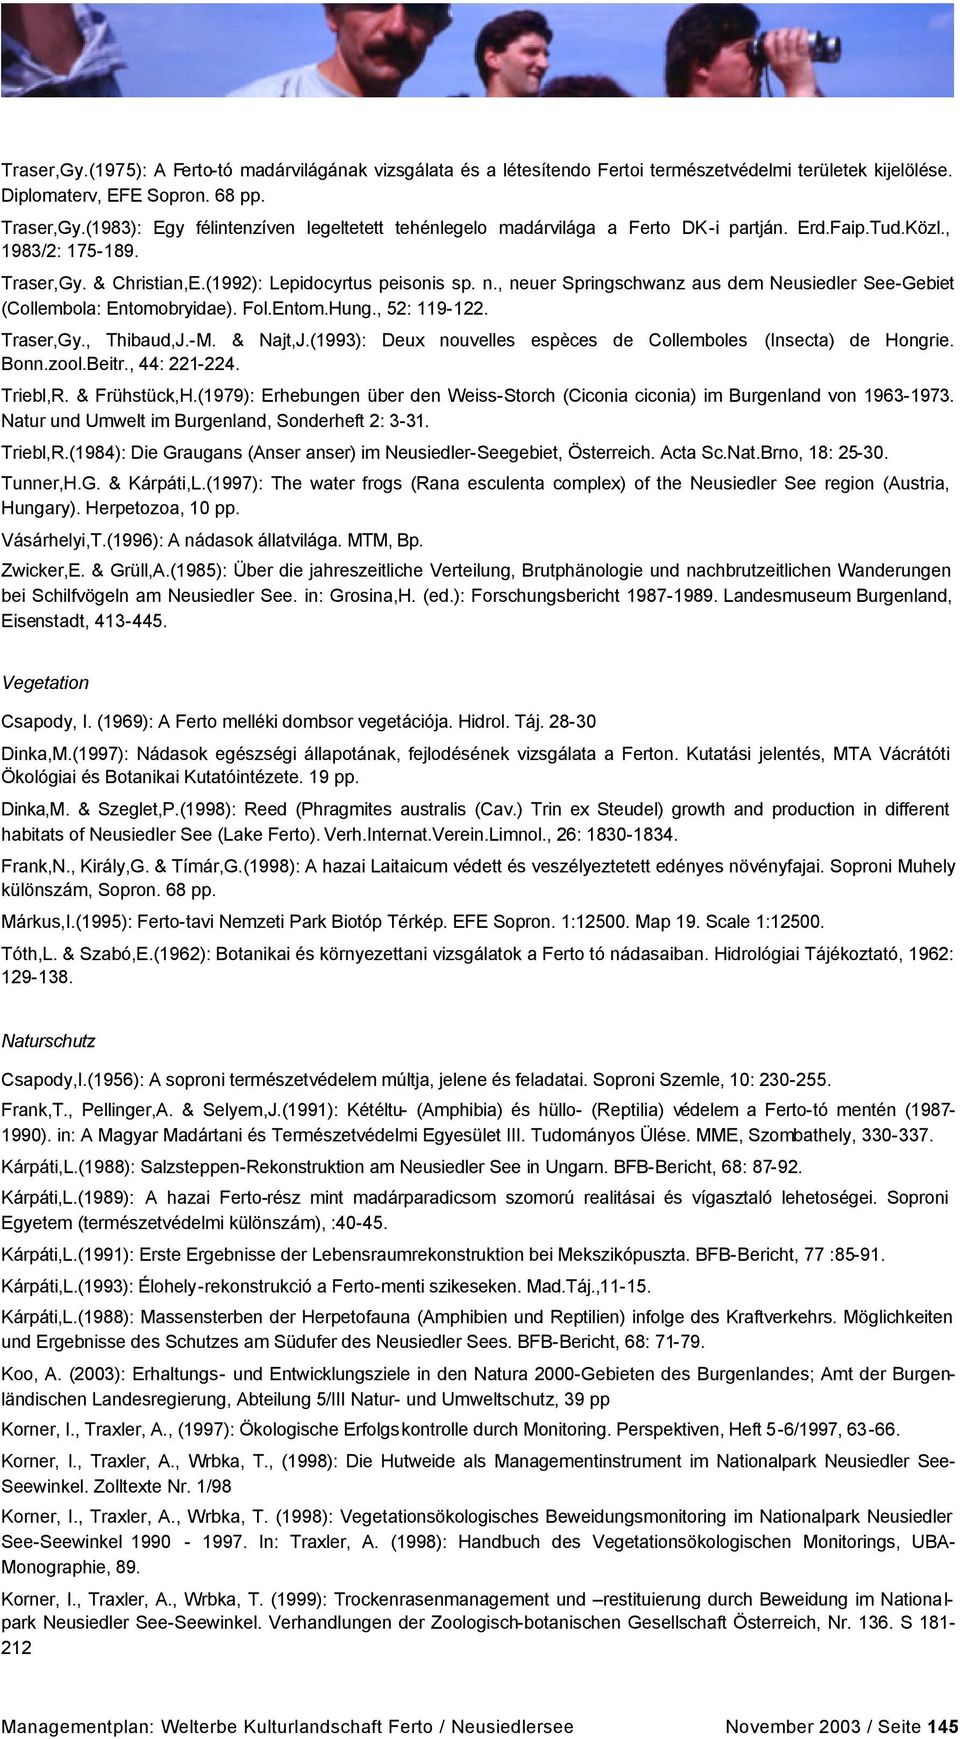 , neuer Springschwanz aus dem Neusiedler See-Gebiet (Collembola: Entomobryidae). Fol.Entom.Hung., 52: 119-122. Traser,Gy., Thibaud,J.-M. & Najt,J.